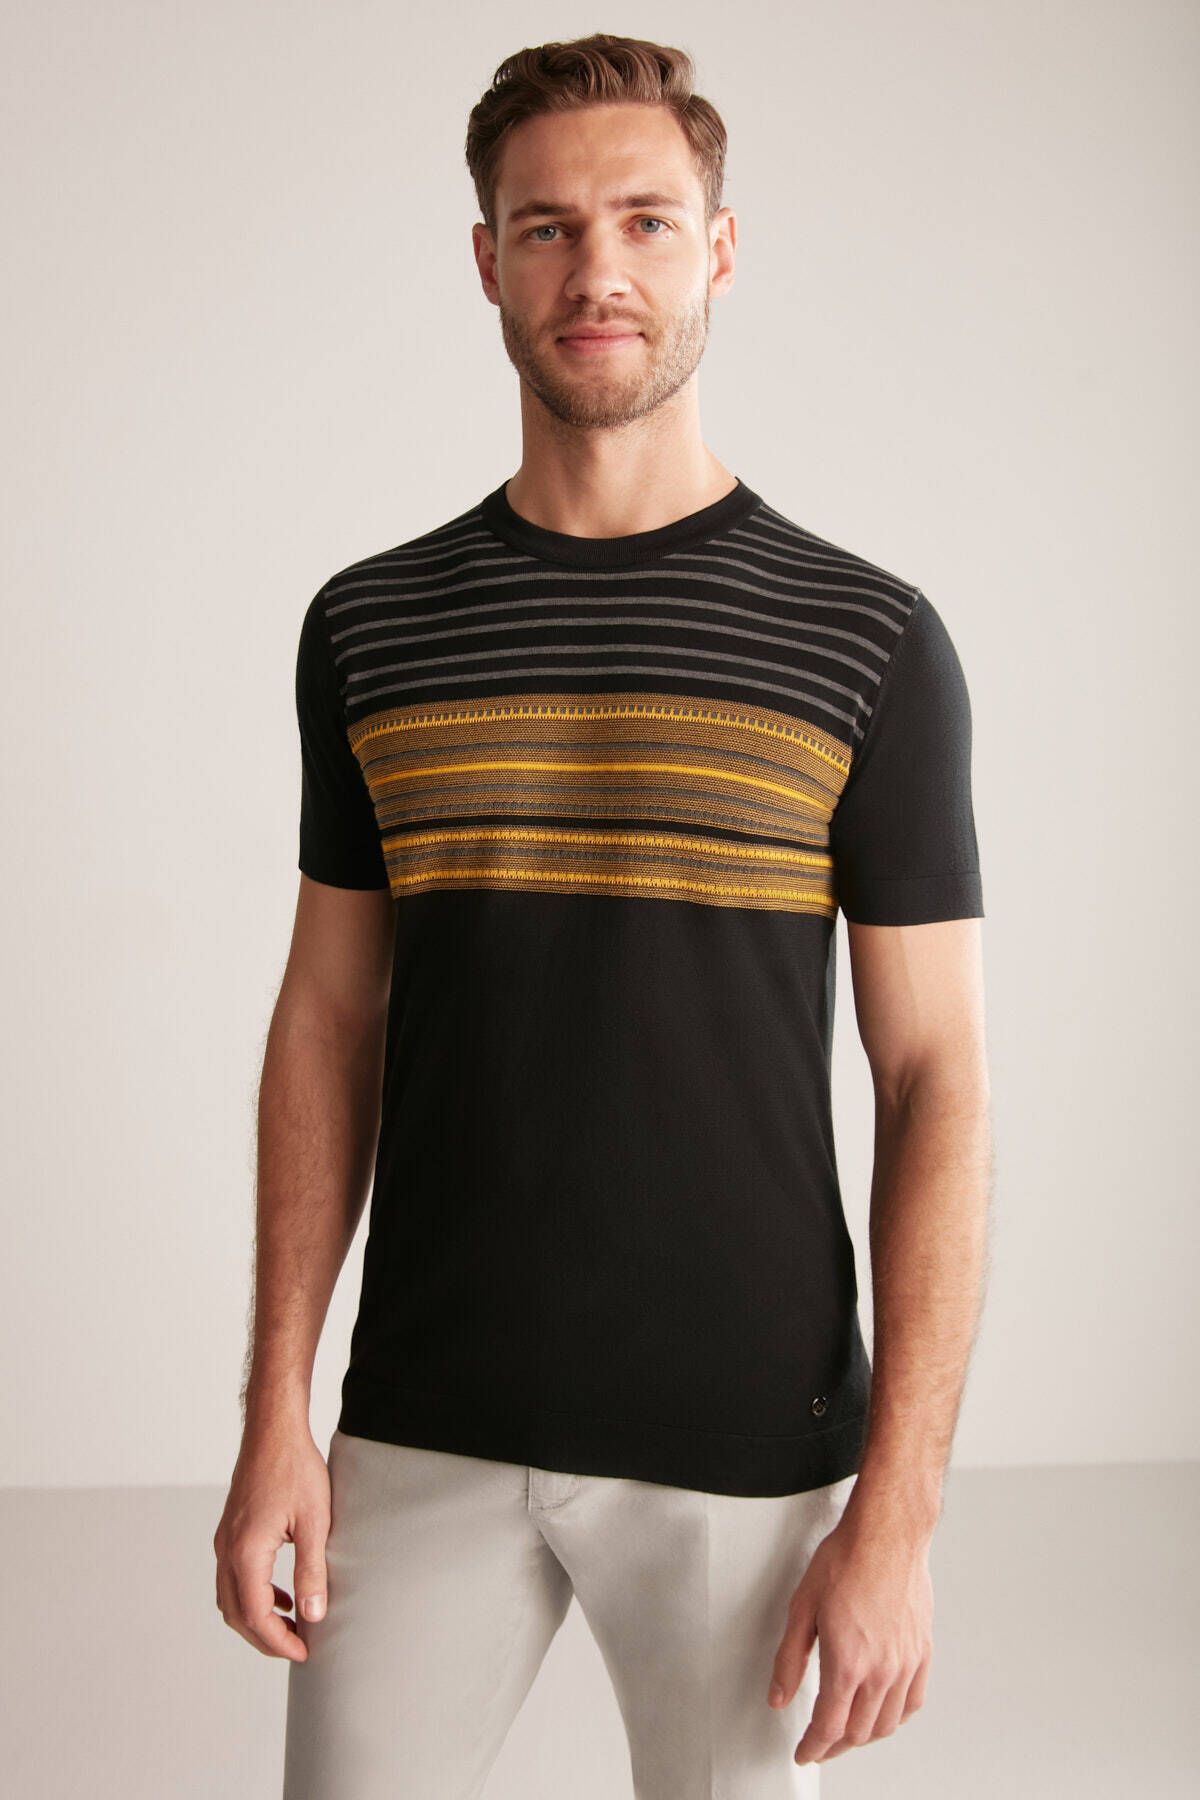 Hemington İpek Pamuk Karışım Çizgi Desenli Siyah Triko T-Shirt